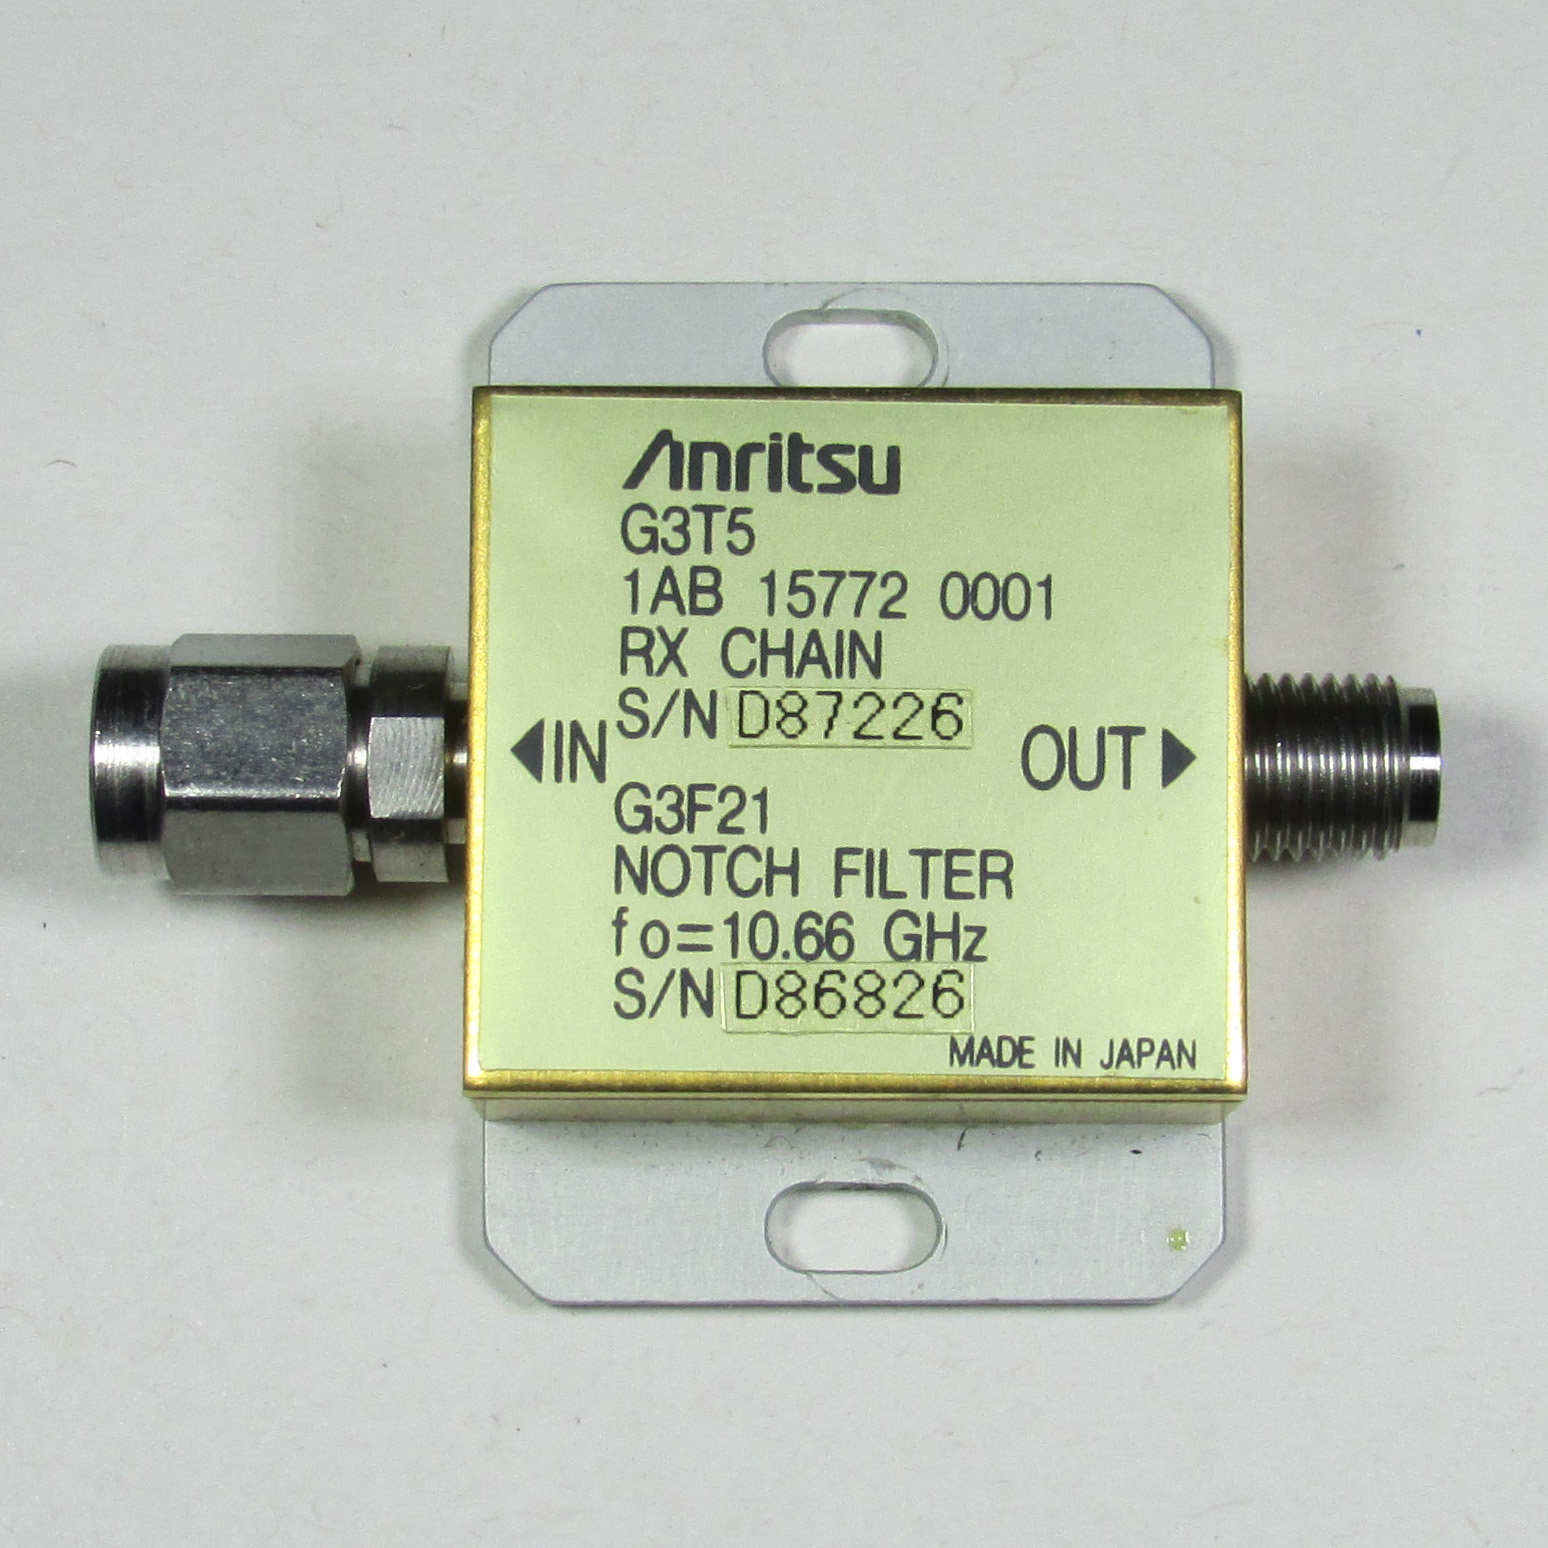 Anritsu G3F21 10.66GHz notch filter 2.92mm interface